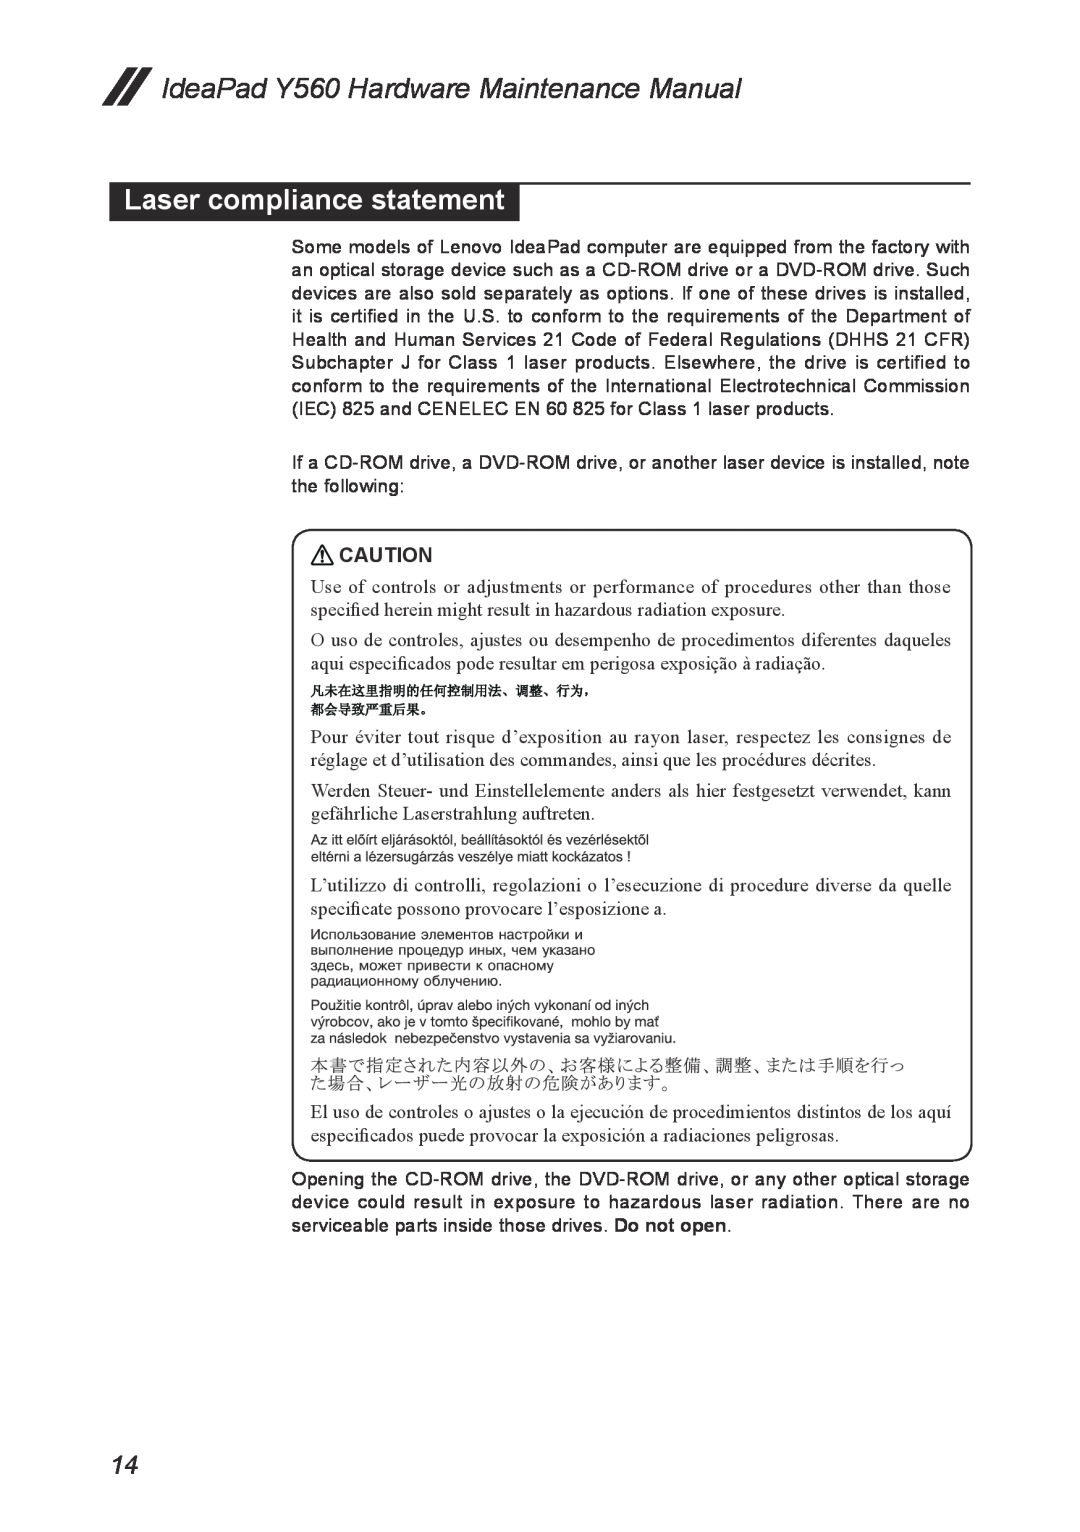 Lenovo manual Laser compliance statement, IdeaPad Y560 Hardware Maintenance Manual 